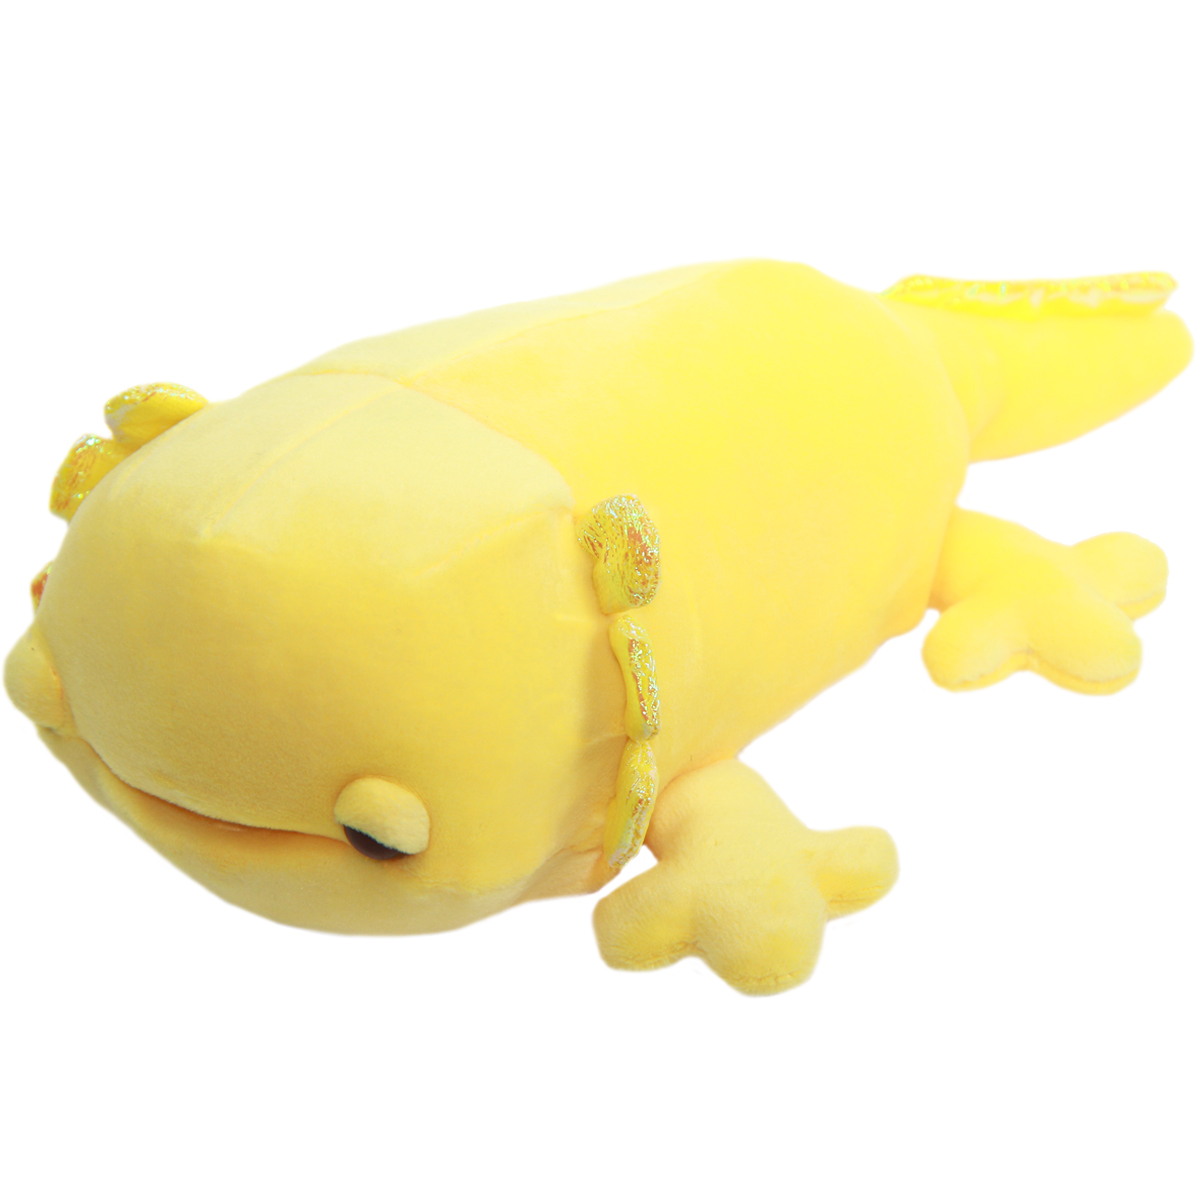 mochi stuffed animal